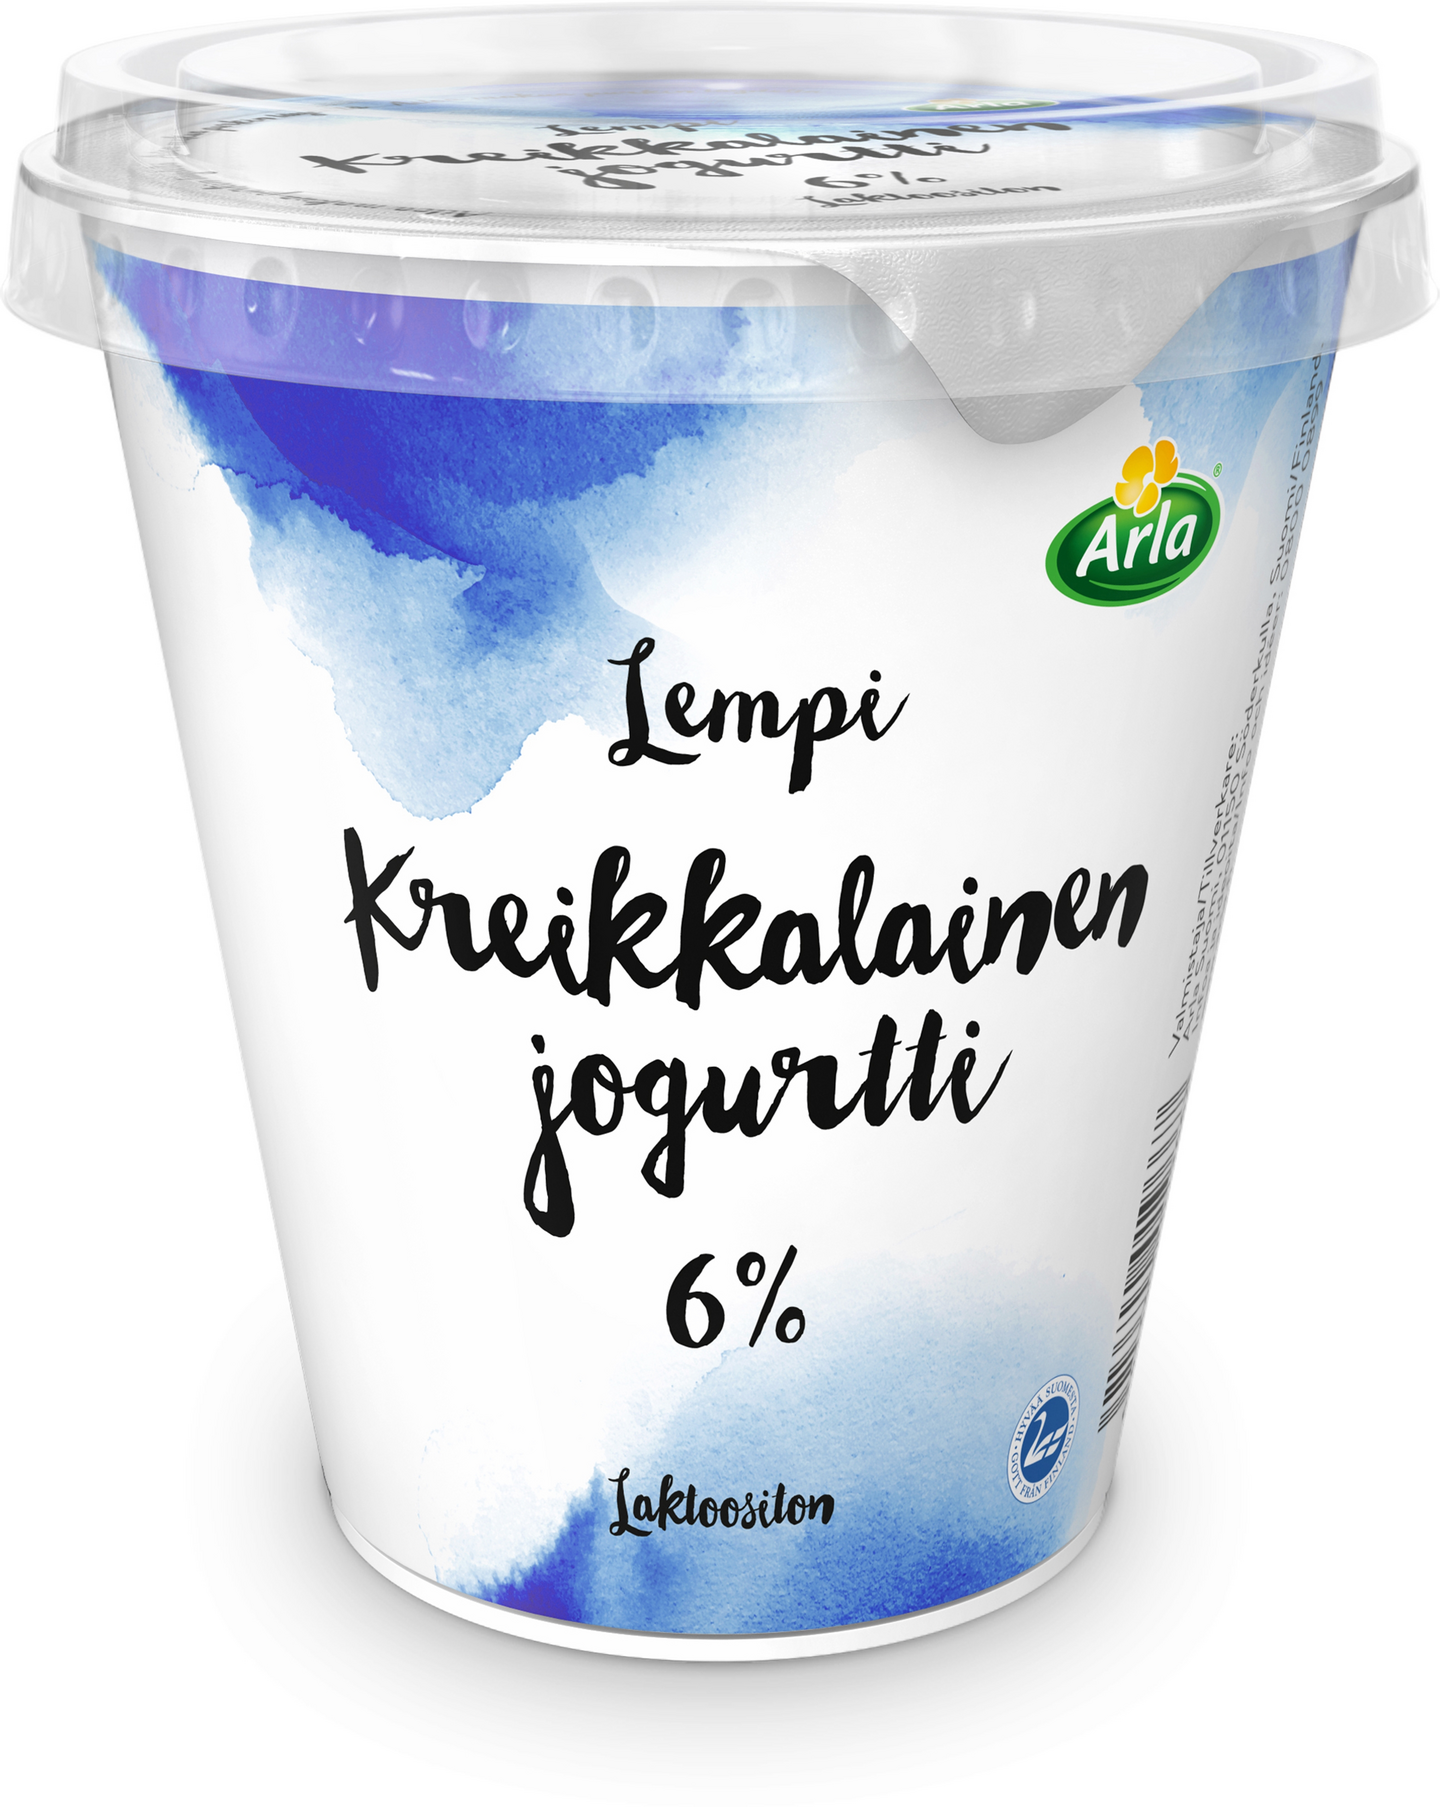 Arla lempi kreikkalainen jogurtti 6% 300g laktoositon